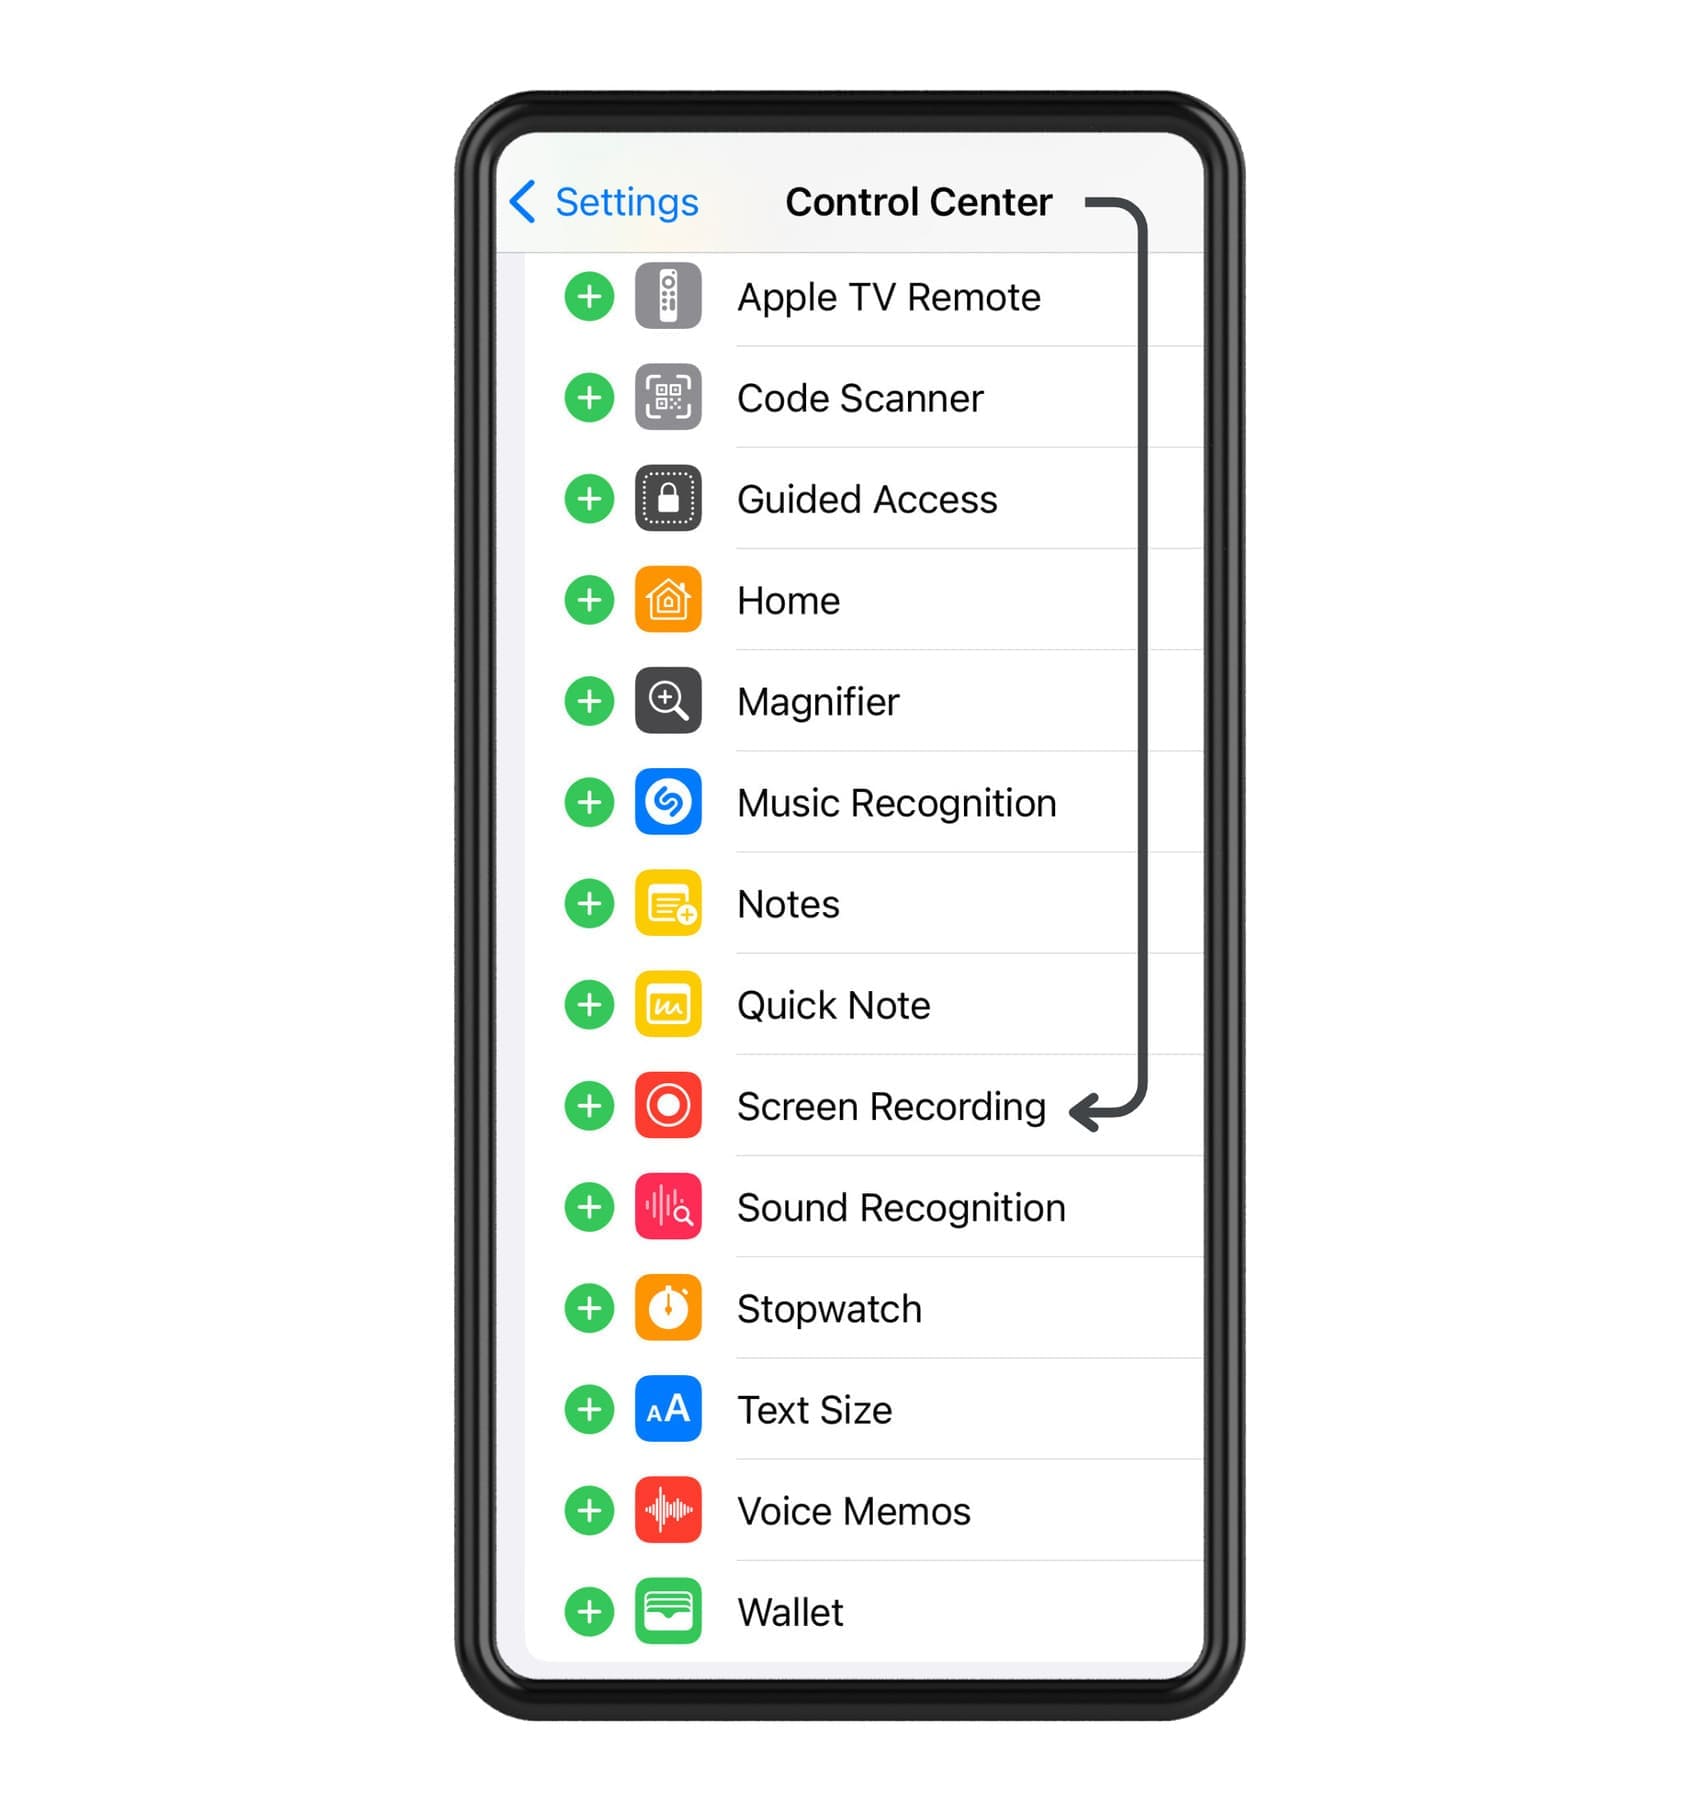 GoToMeeting settings on iOS